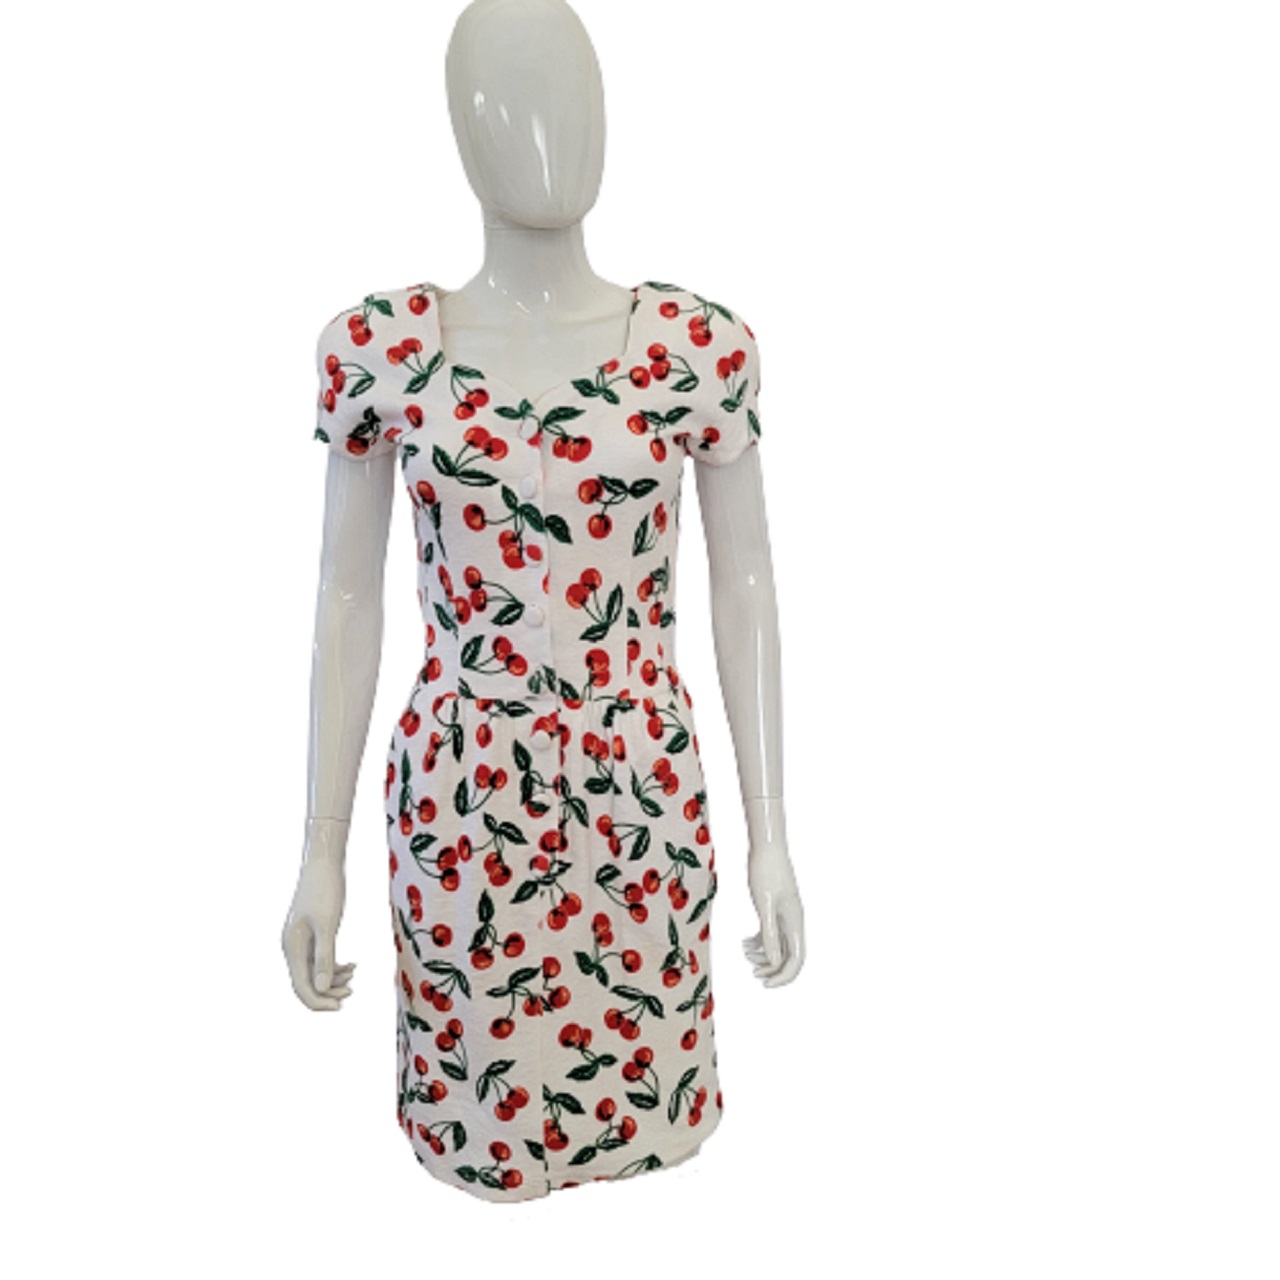 90s Floral Bodycon Dress / Adrienne Vittadini / White Cotton Dress / Short  Sleeve / Vintage Mini Dress / Pockets / Doodle Art 